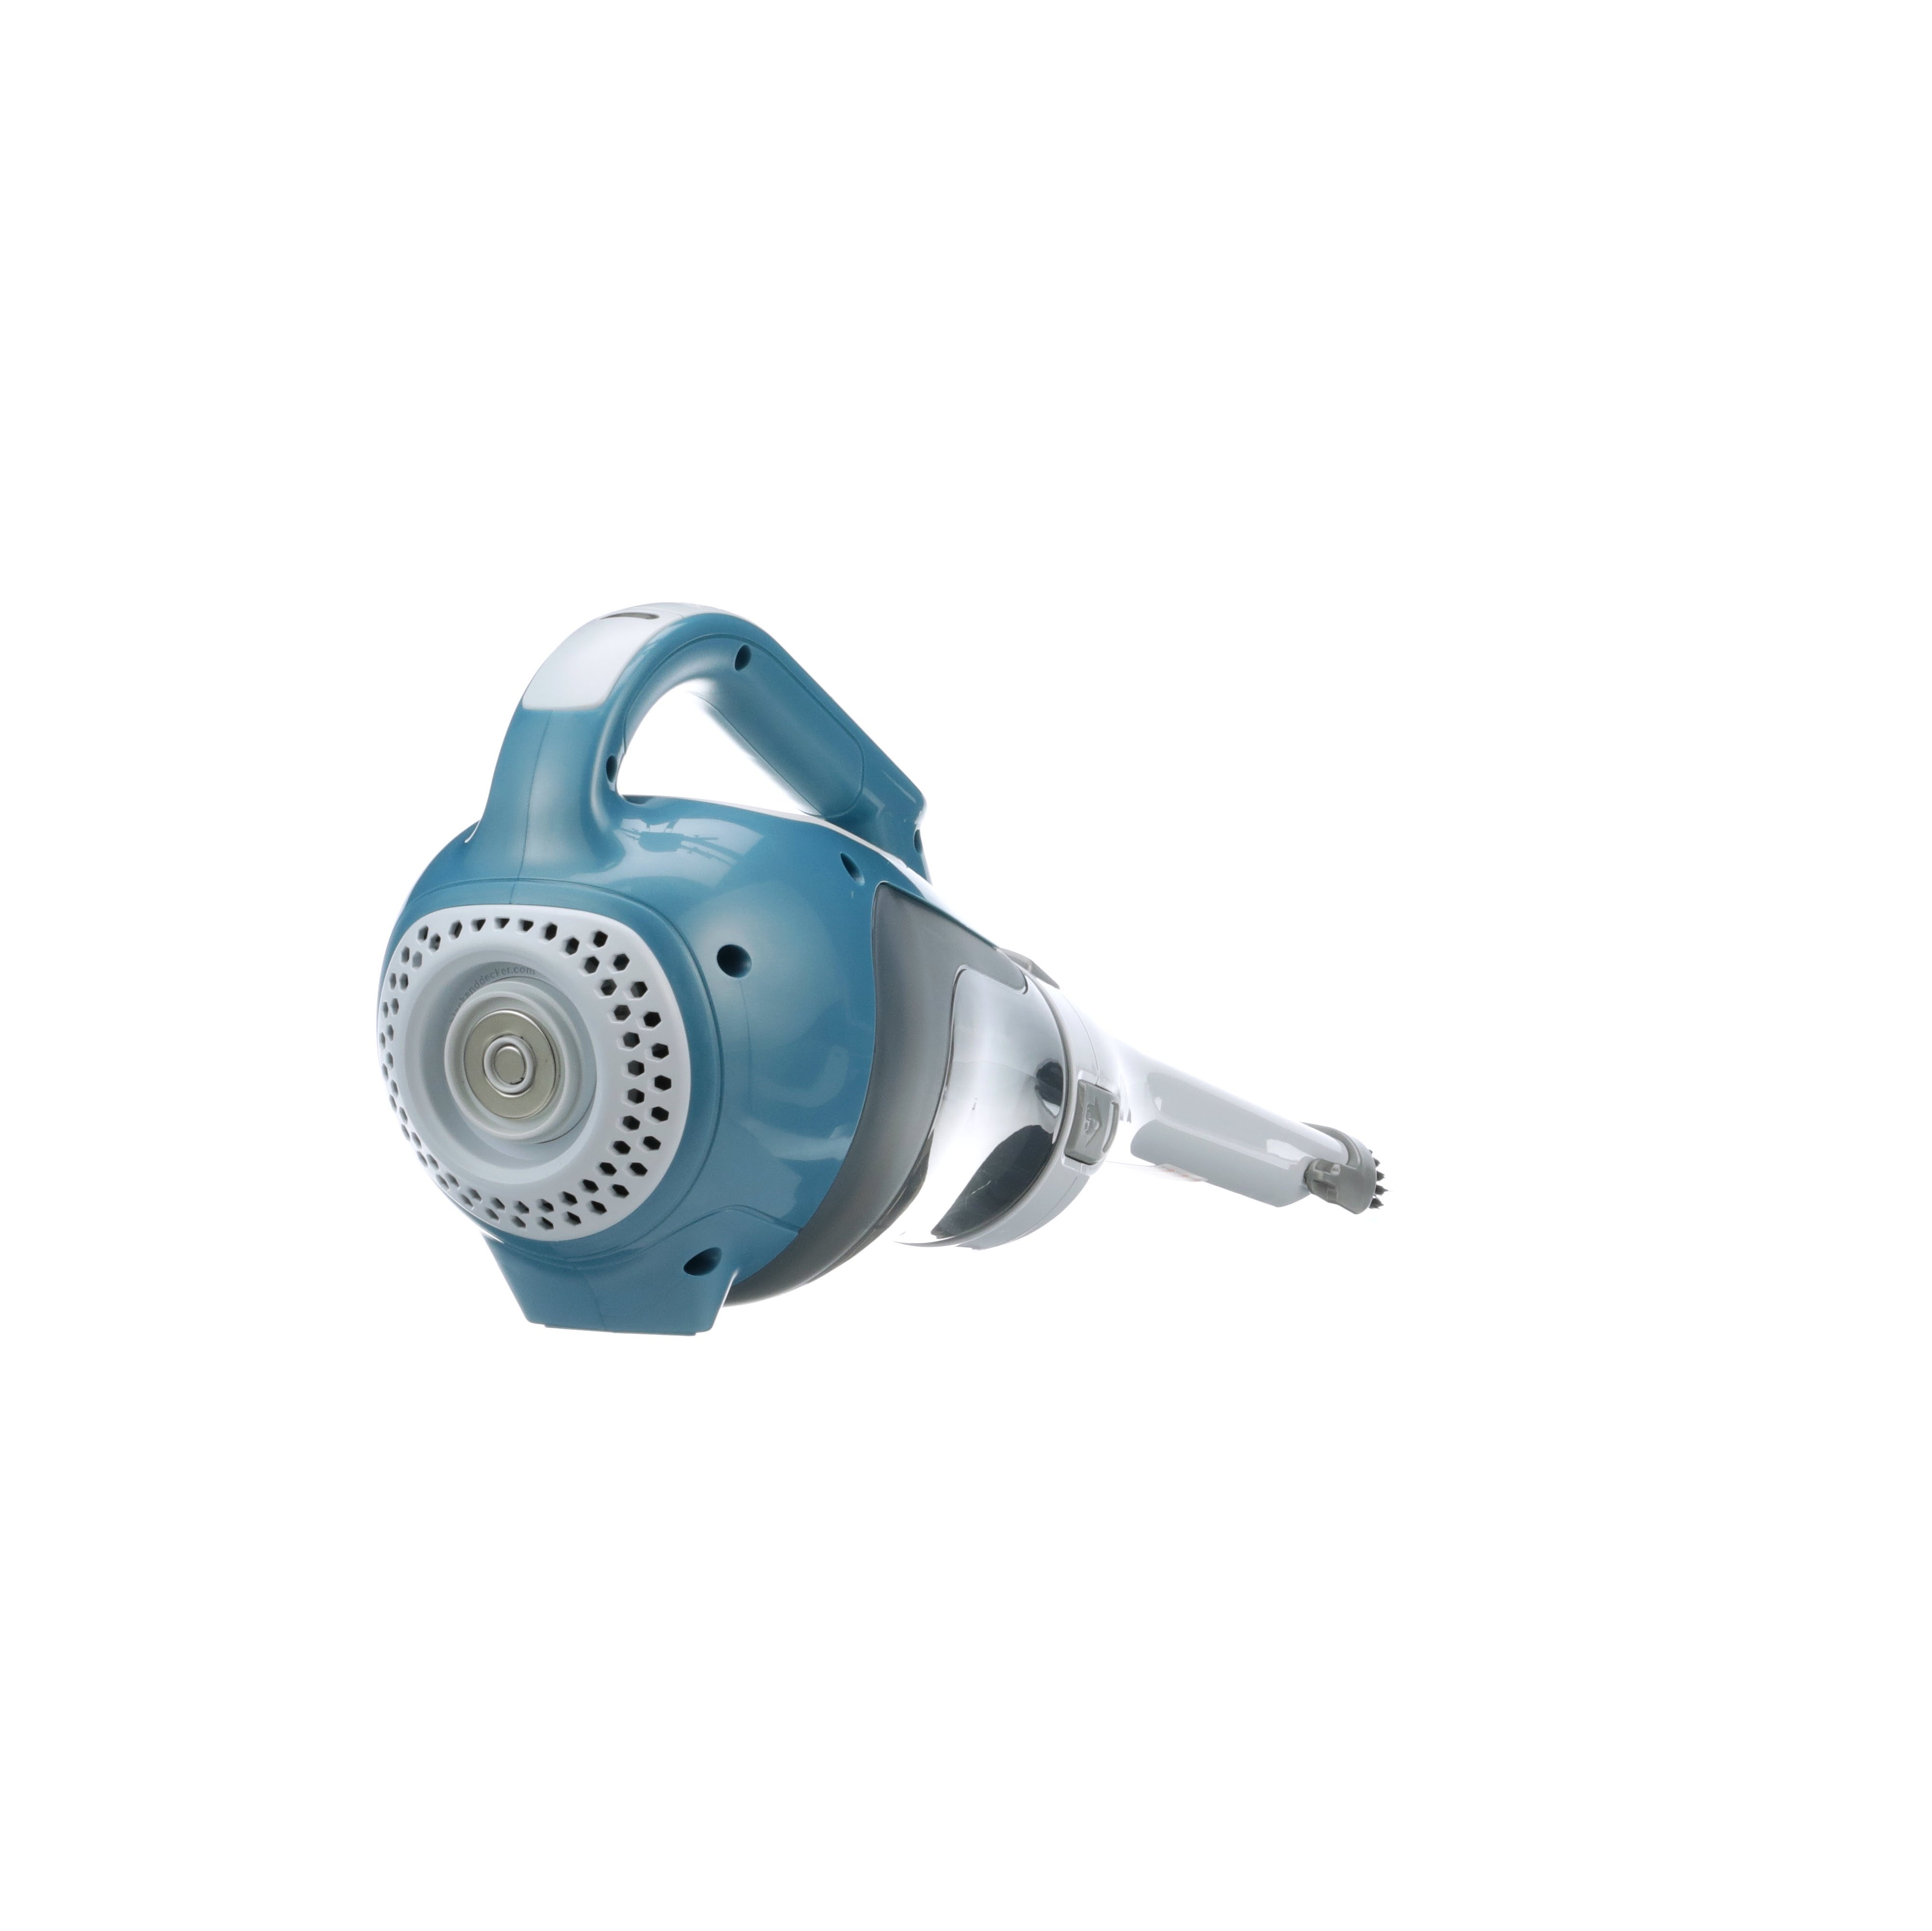 Black+Decker dustbuster Hand Vacuum, White #CHV1410L (1/Pkg.)